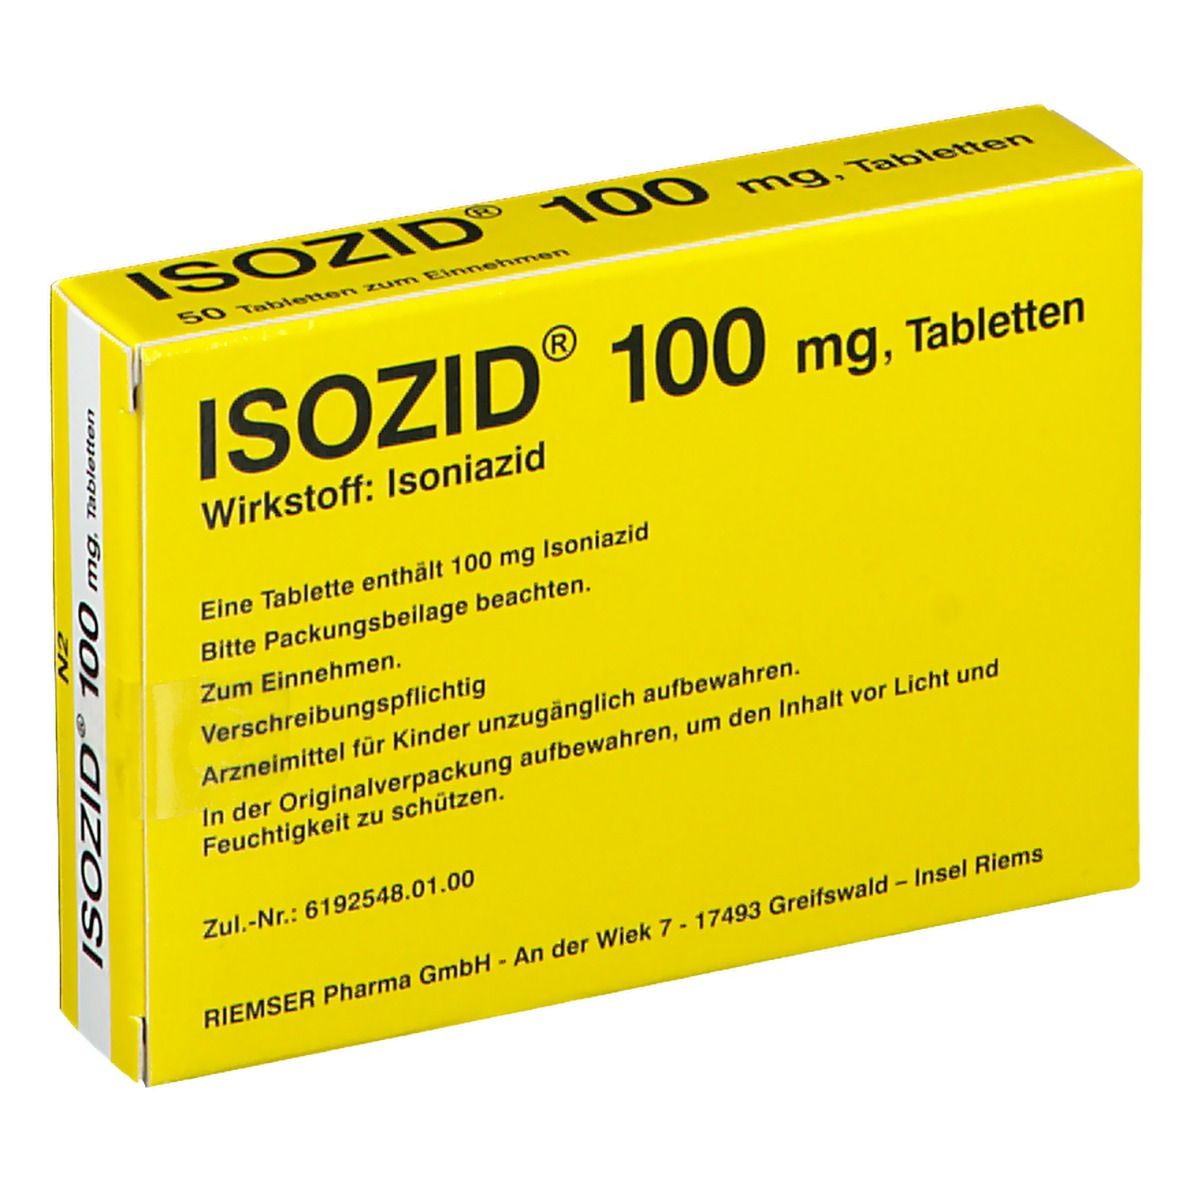 ISOZID® 100 mg